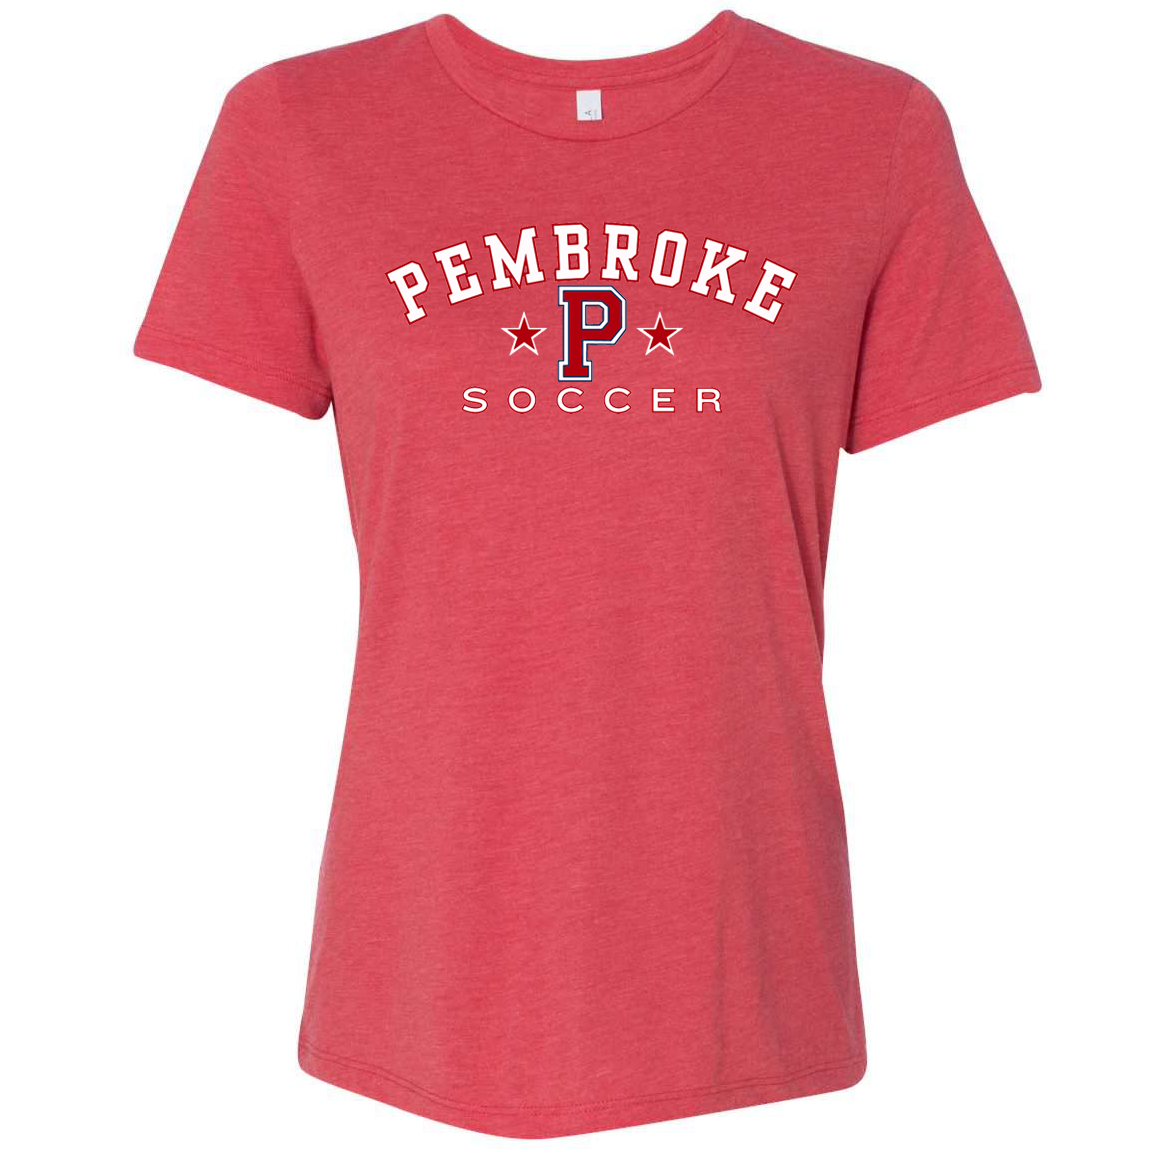 Pembroke Soccer Women’s Relaxed Fit Triblend Tee